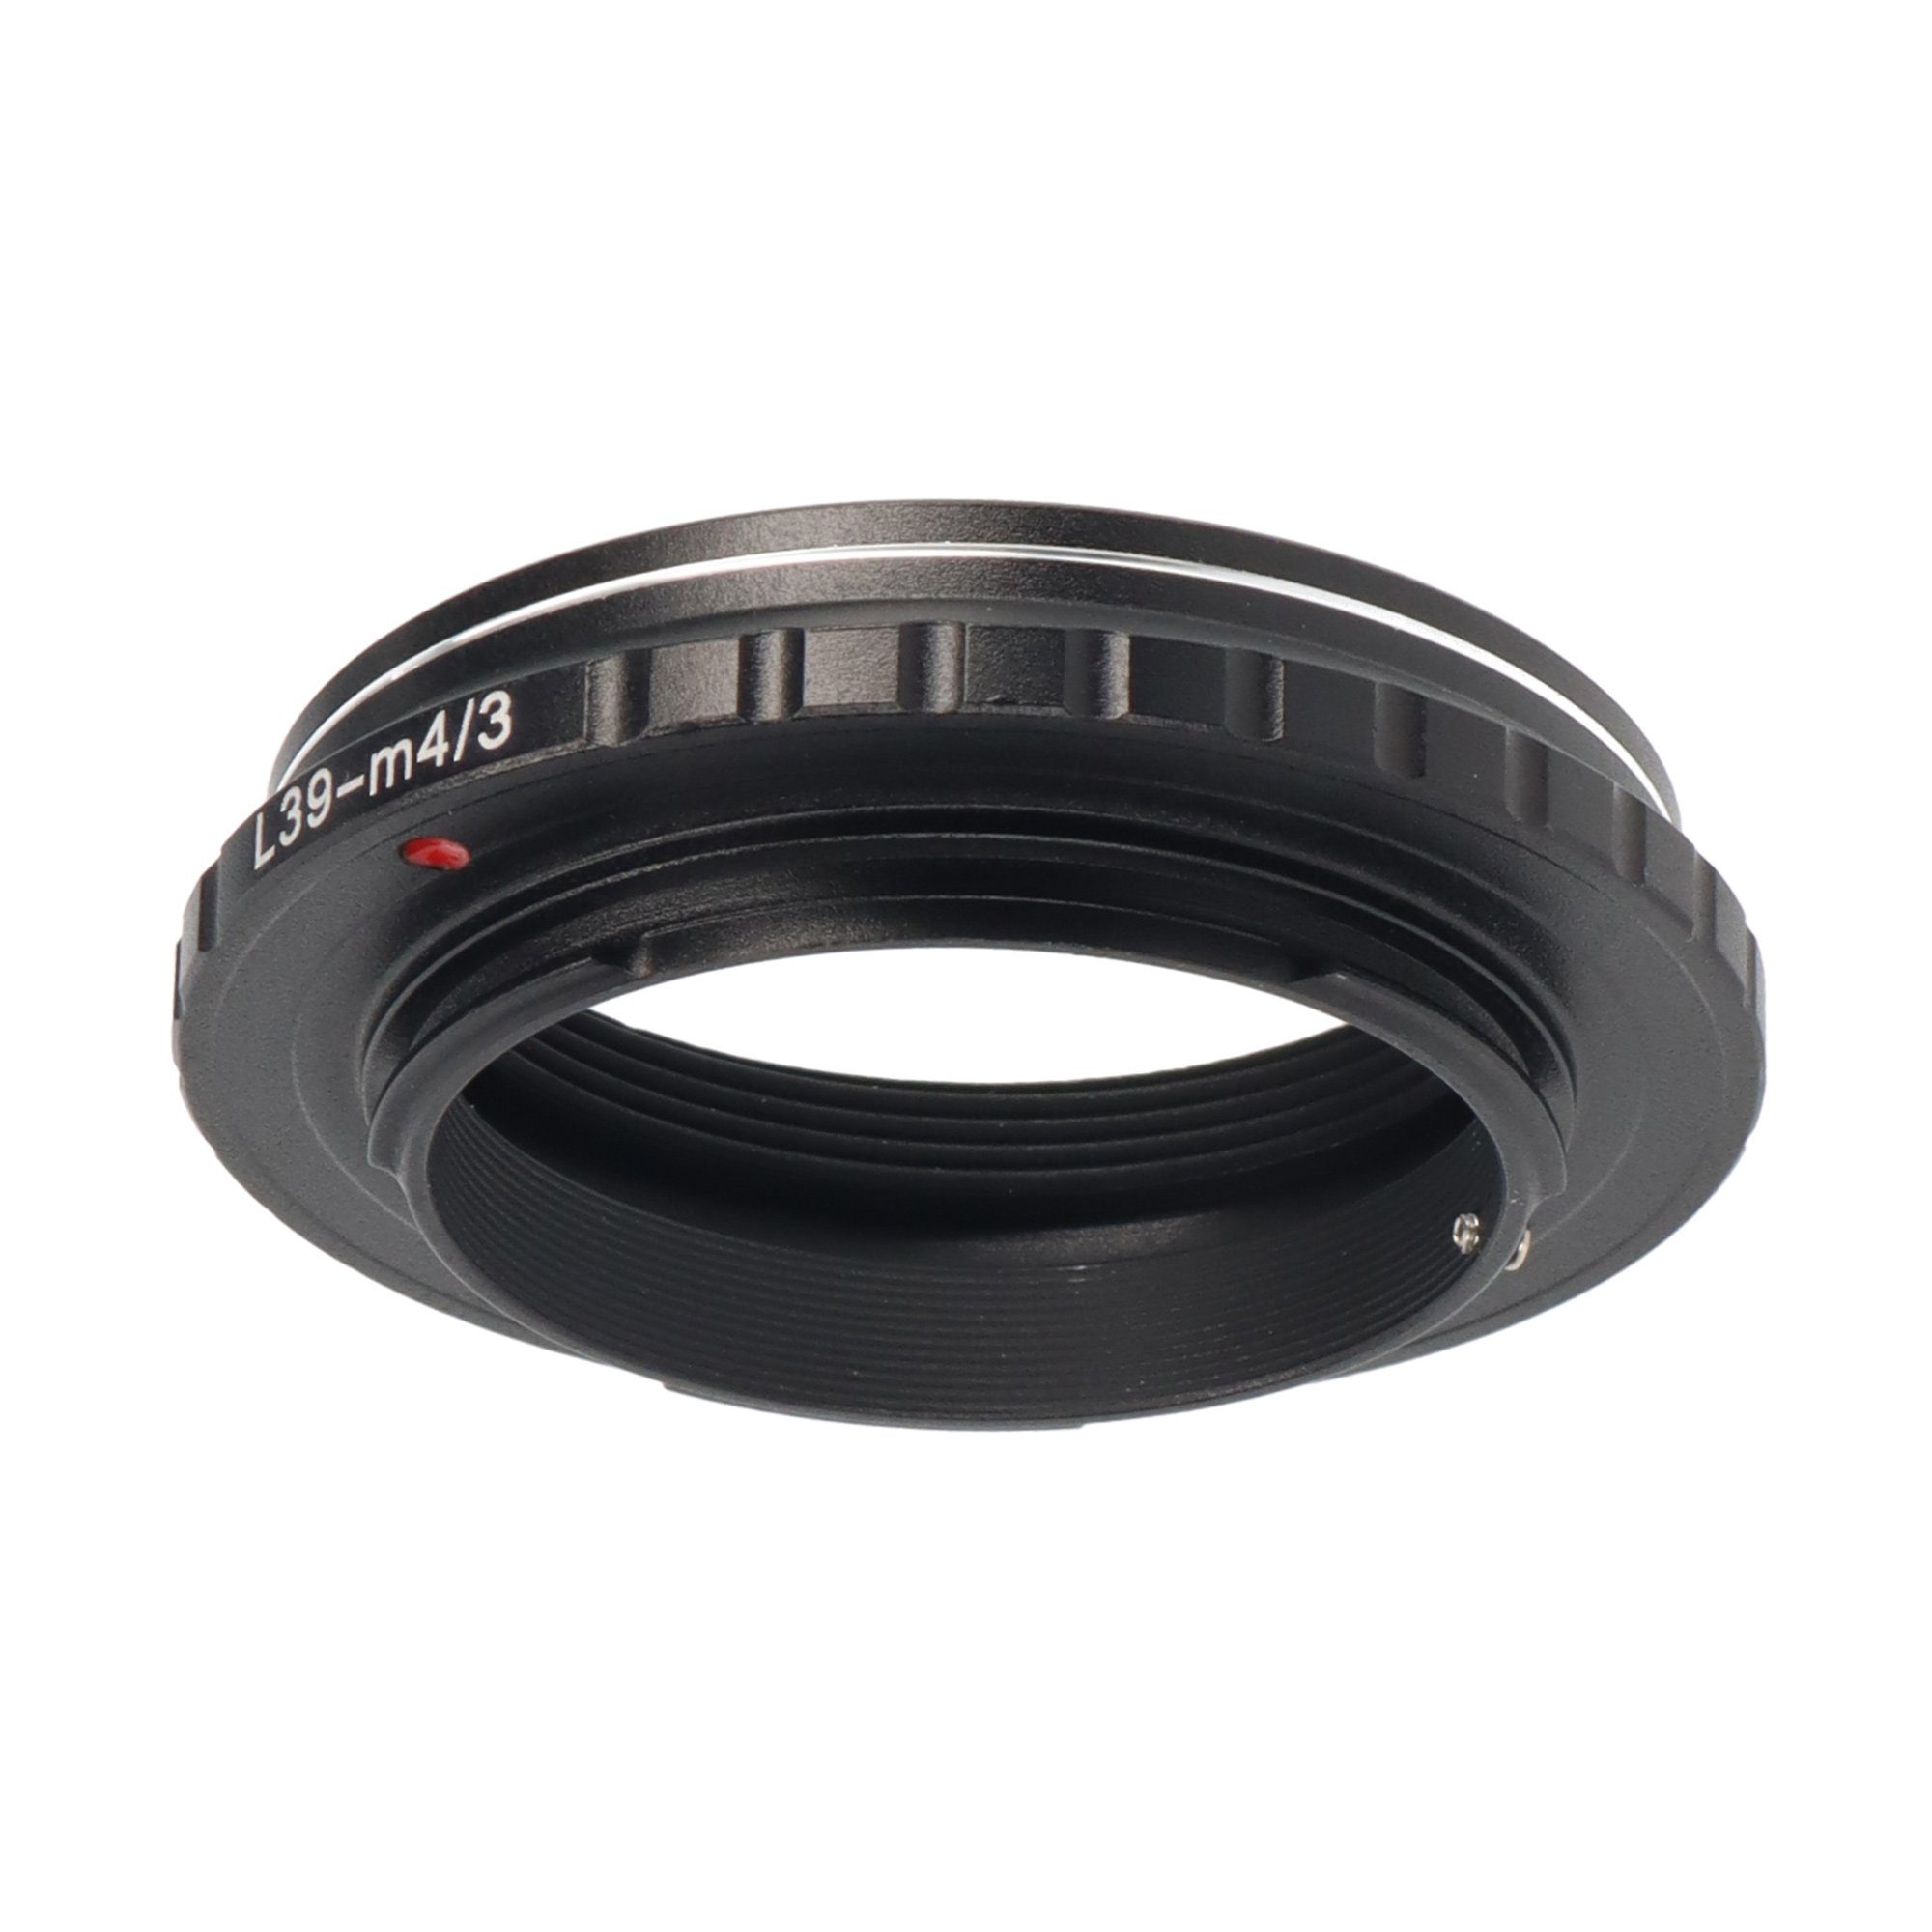 ayex Objektive Leica L39 Objektiveadapter Objektivadapter Micro Kameras an 4/3